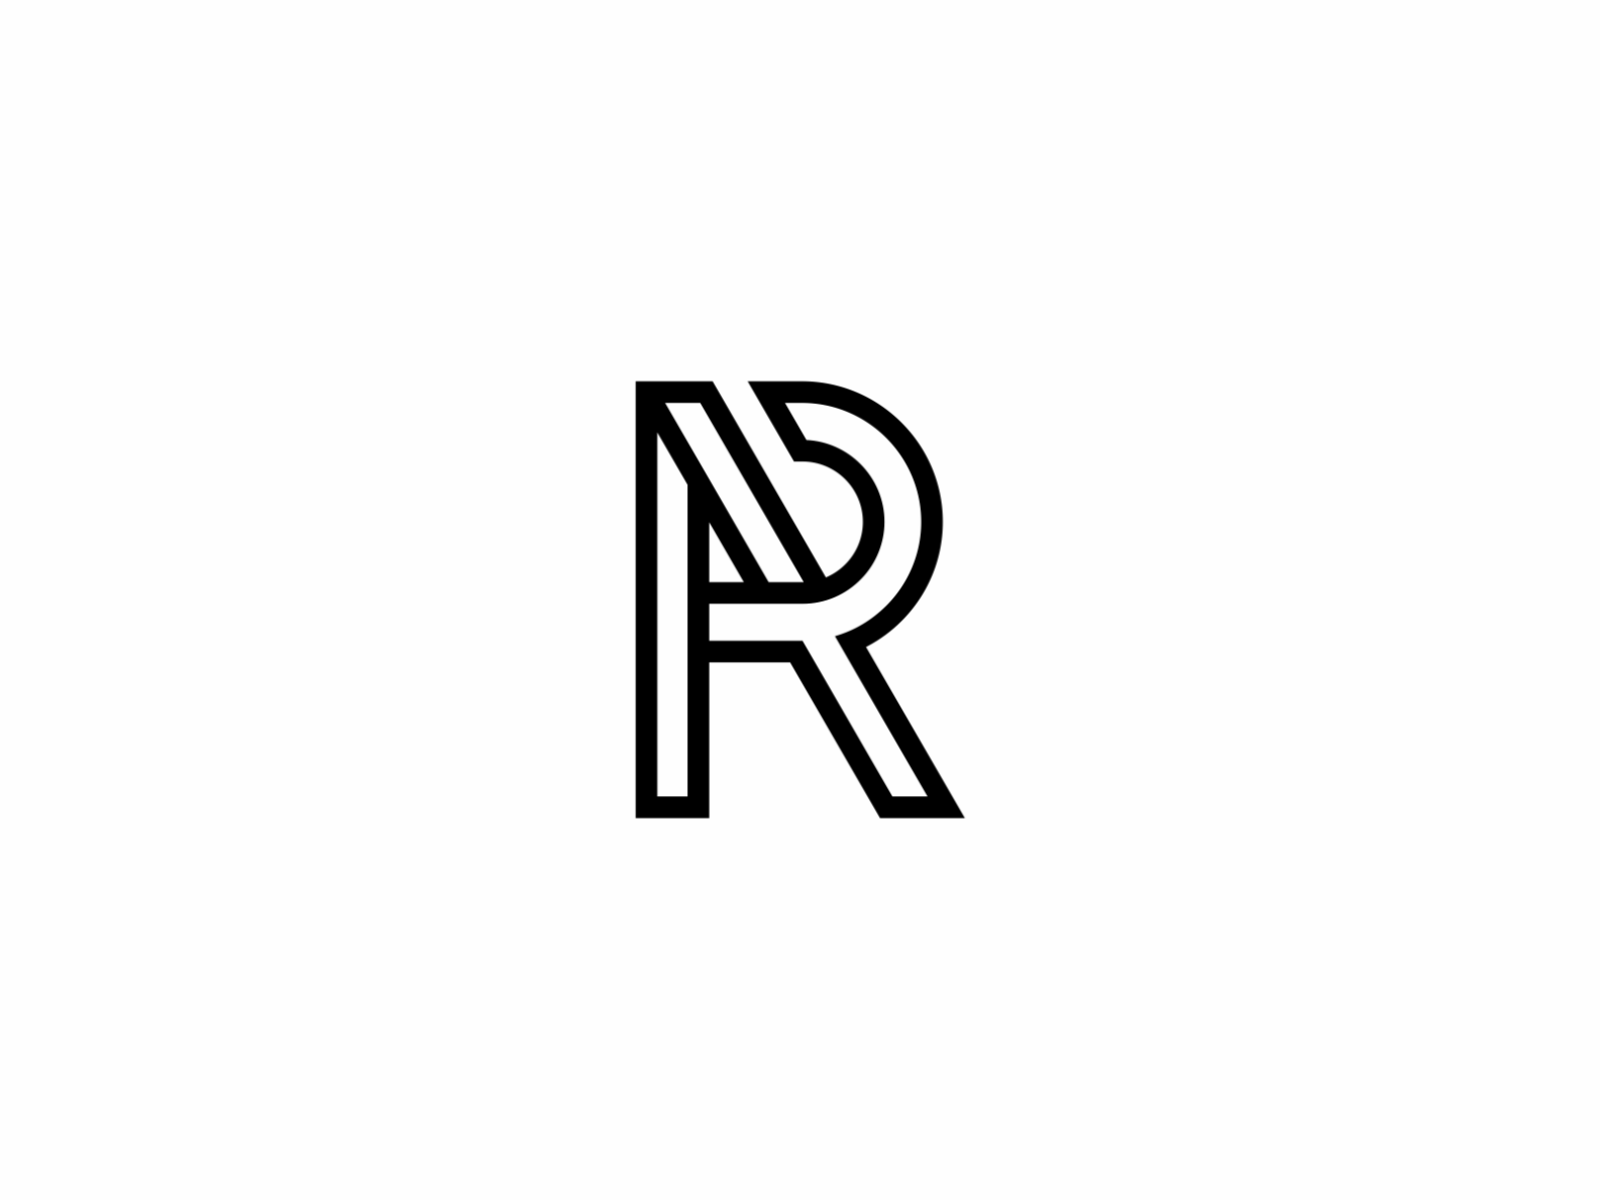 AR Logo PNG Transparent & SVG Vector - Freebie Supply